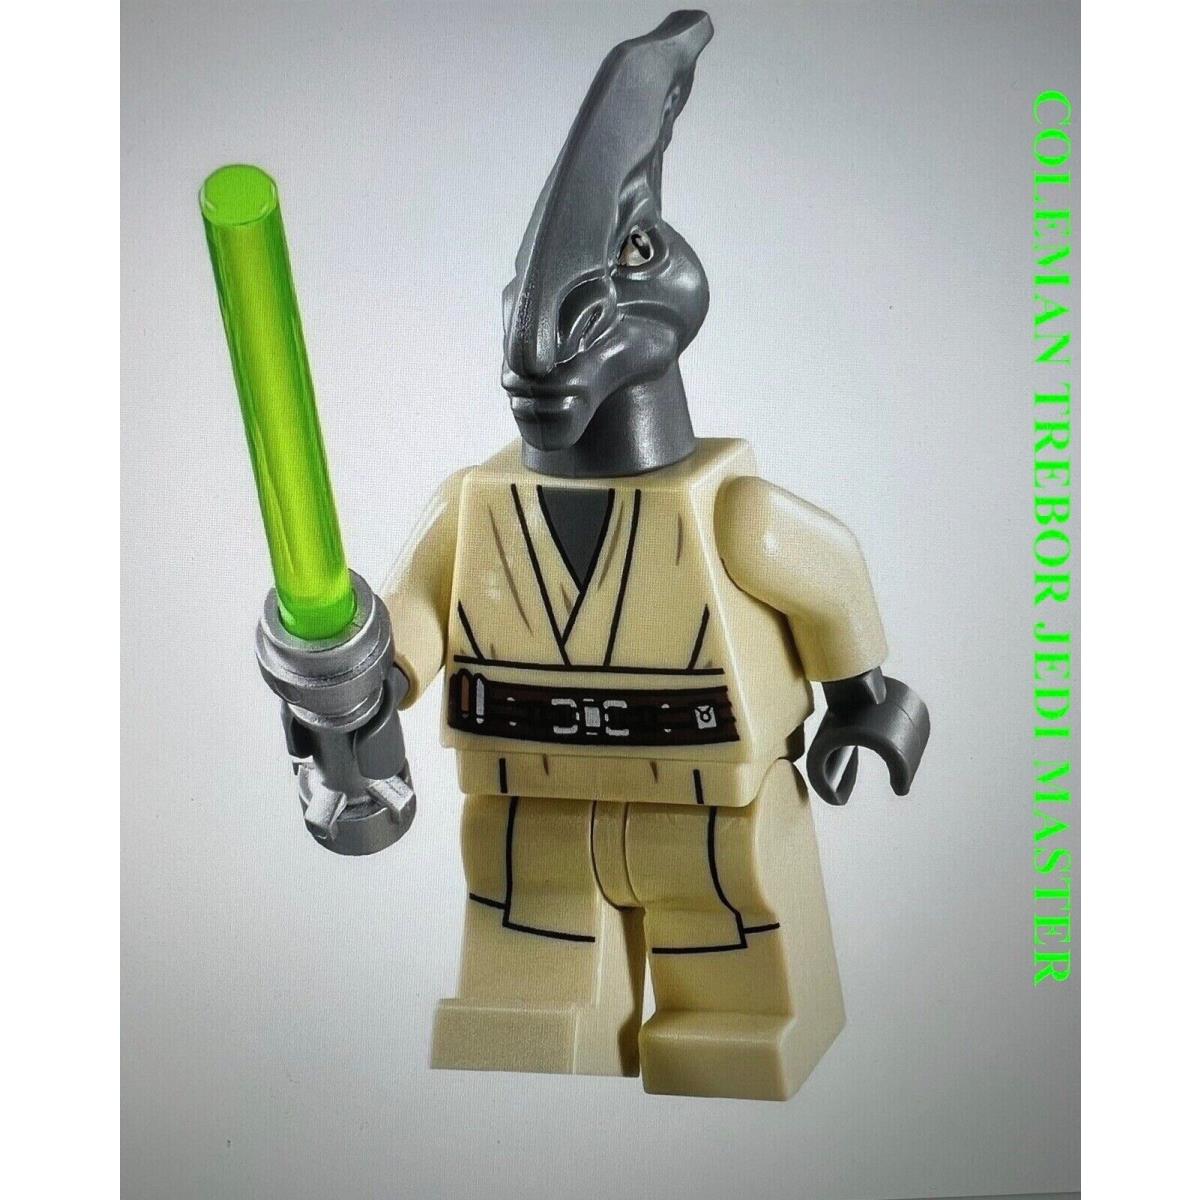 Lego Star Wars Coleman Trebor Jedi Knight From Lego Set 75015